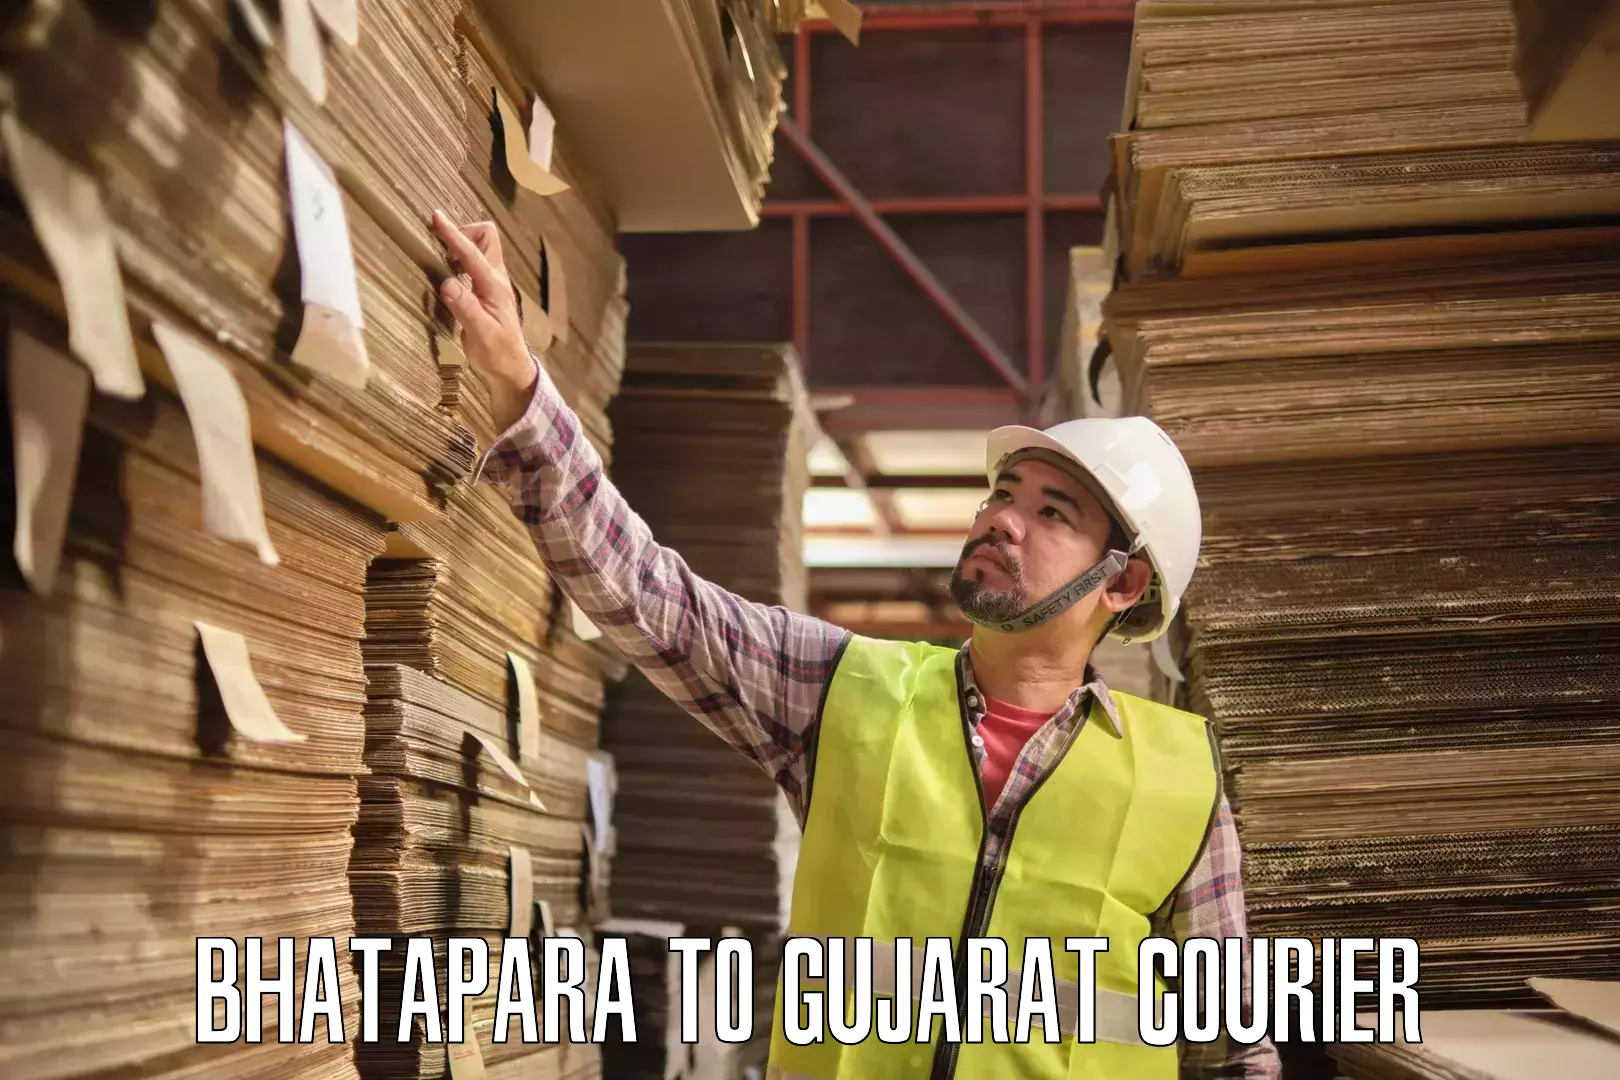 Automated shipping processes Bhatapara to Valsad